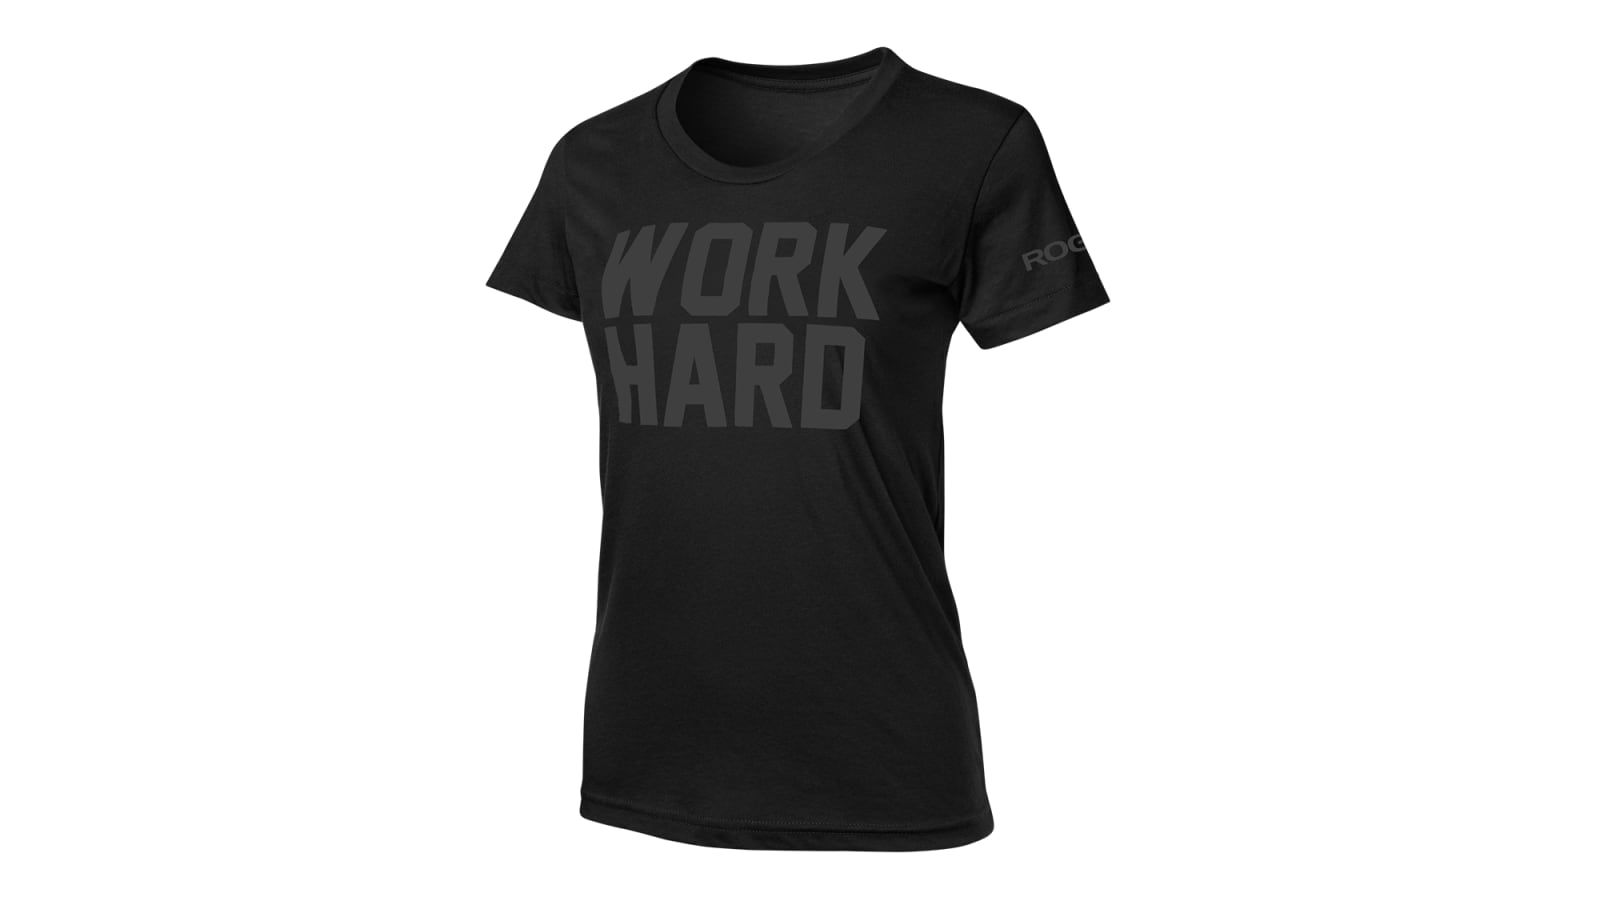 Rogue Work Hard - Women's - Black